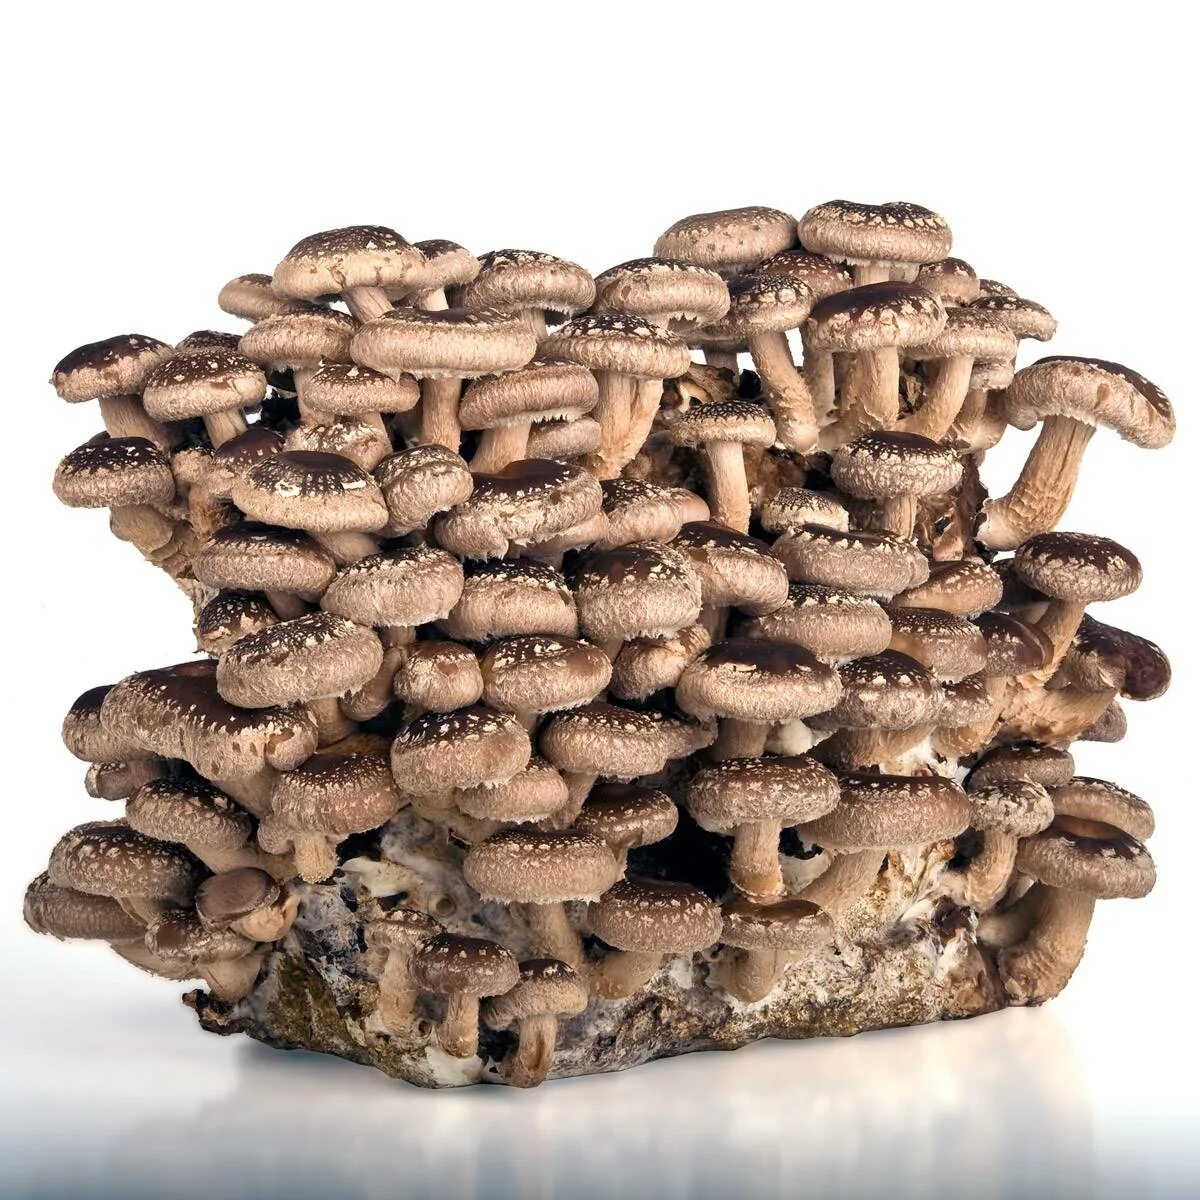 Шиитаке свойства. Японские грибы шиитаке. Шиитаке Lentinus edodes. Сиитаке (шиитаке. Китайские грибы шитаки.